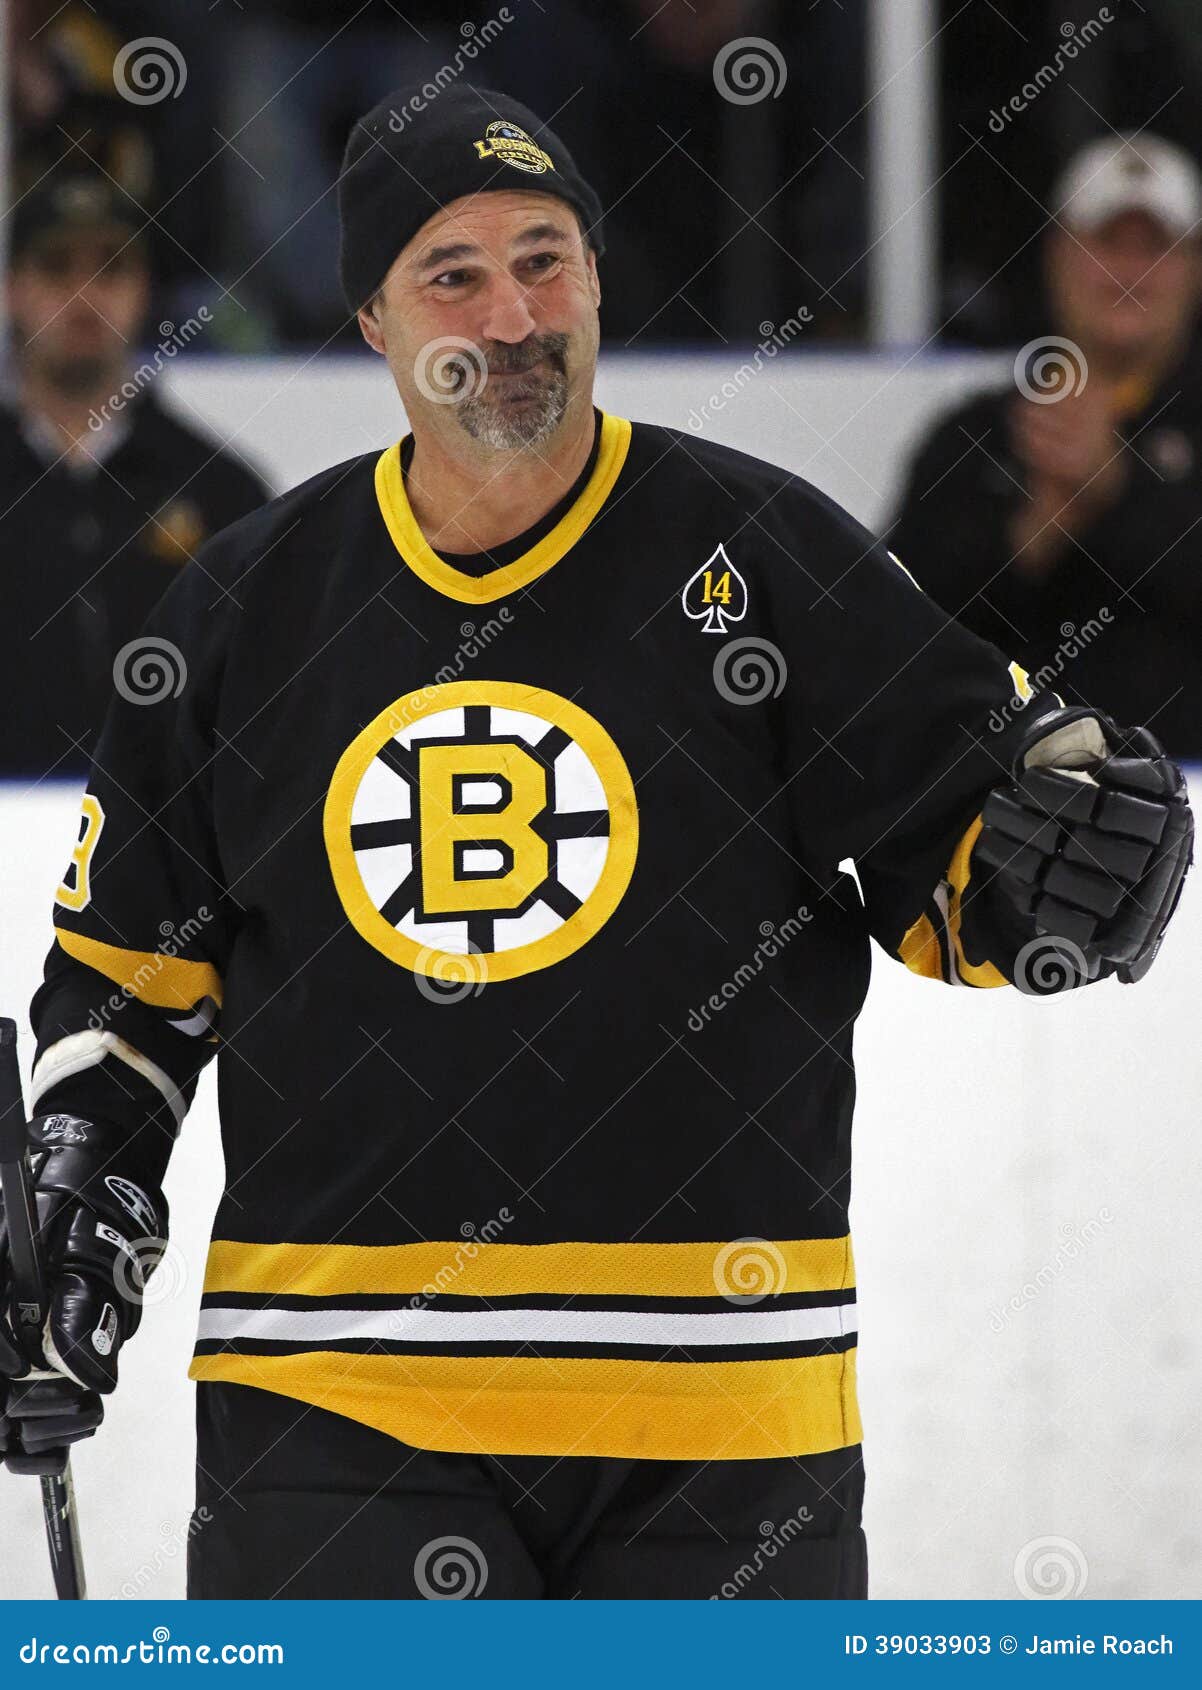 Boston Bruins Alumni Hockey Game Jay Miller Editorial Stock Photo - Image: 390339031066 x 1300